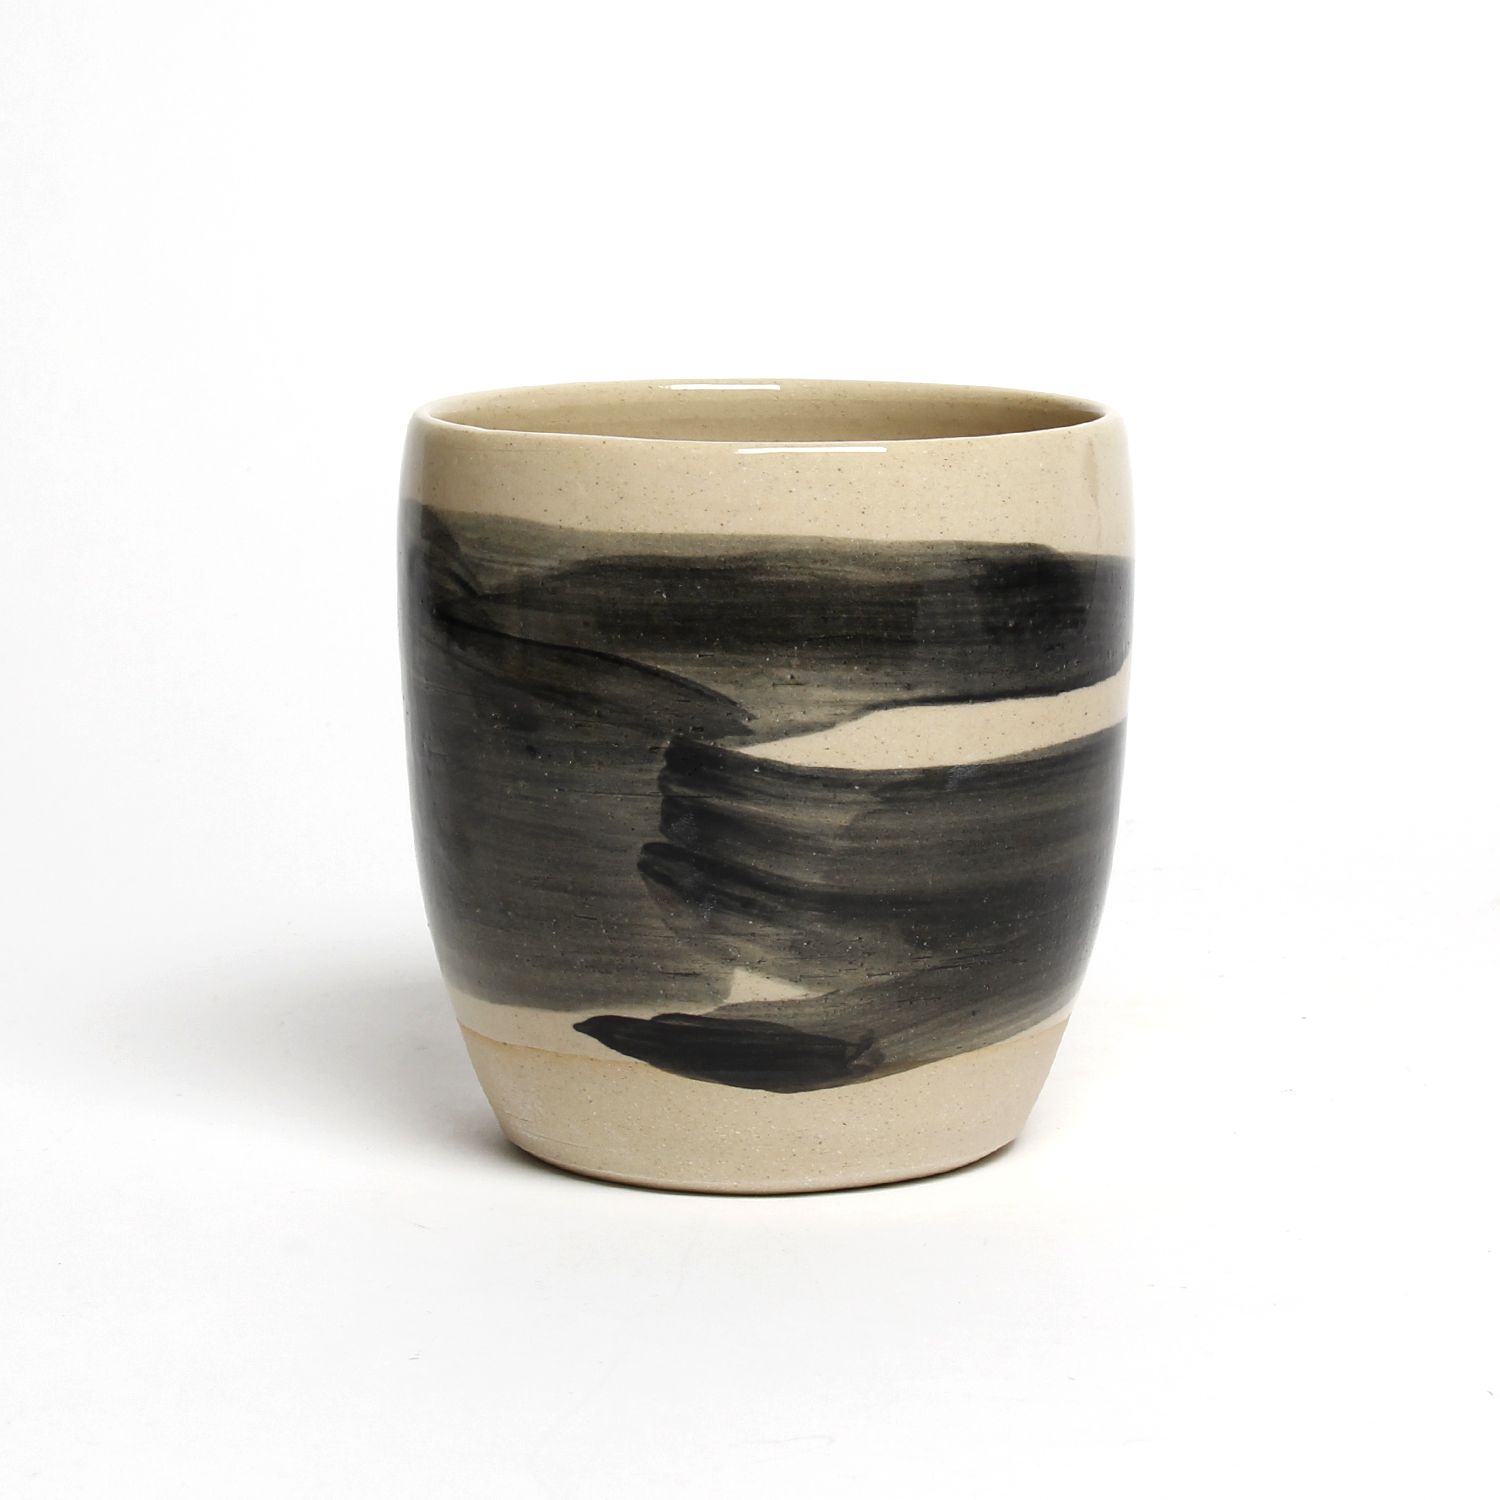 Suzanne Morrissette: Painter’s Planter Vase Product Image 4 of 4